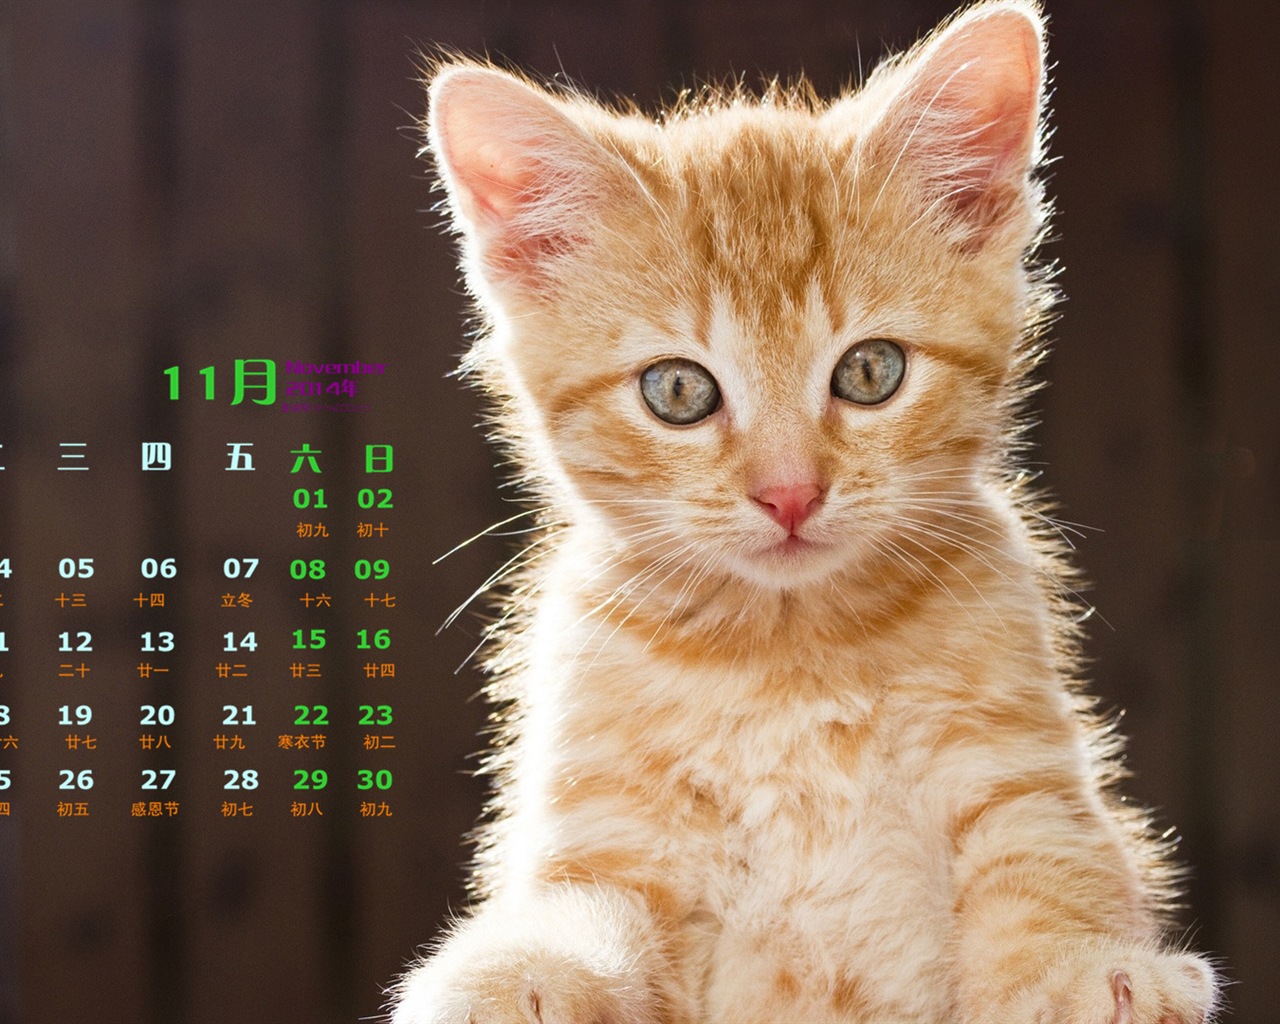 November 2014 Calendar wallpaper(1) #5 - 1280x1024